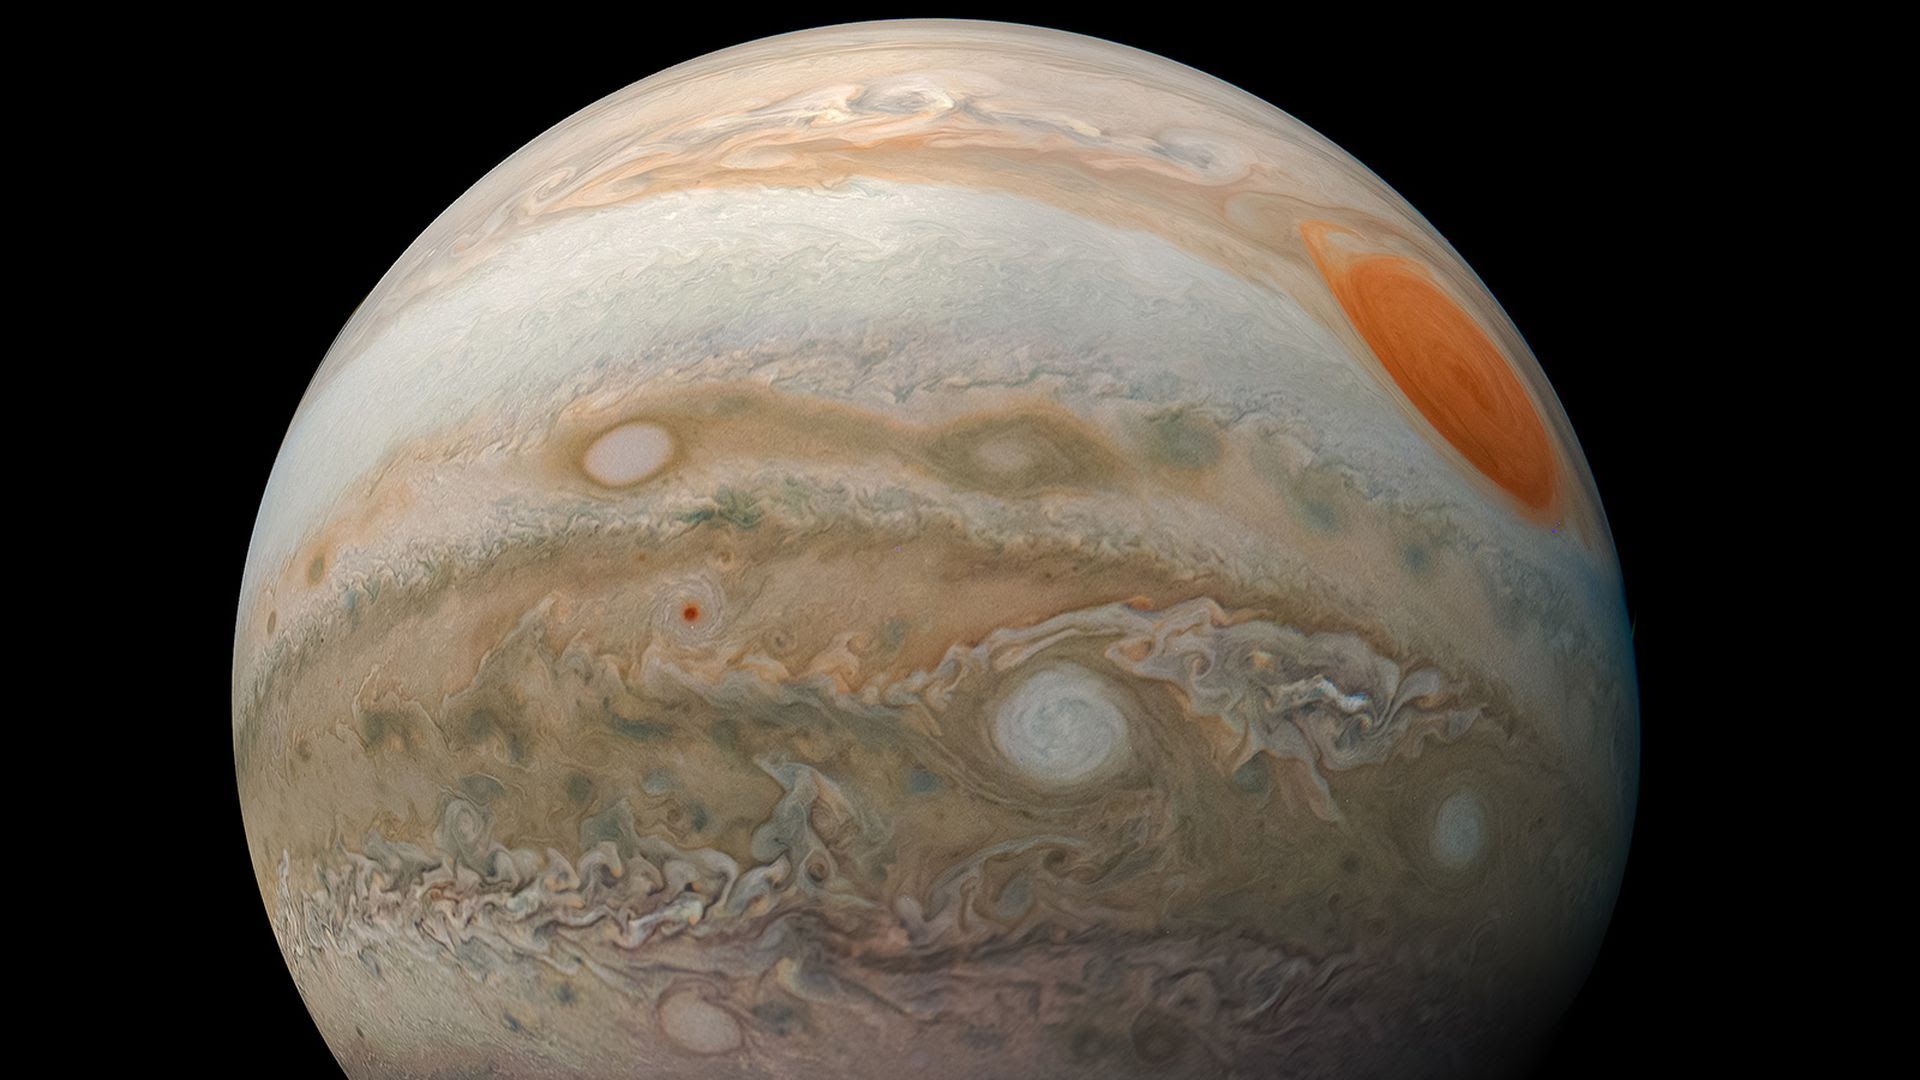 Jupiter as seen by the Juno spacecraft. Photo: NASA/JPL-Caltech